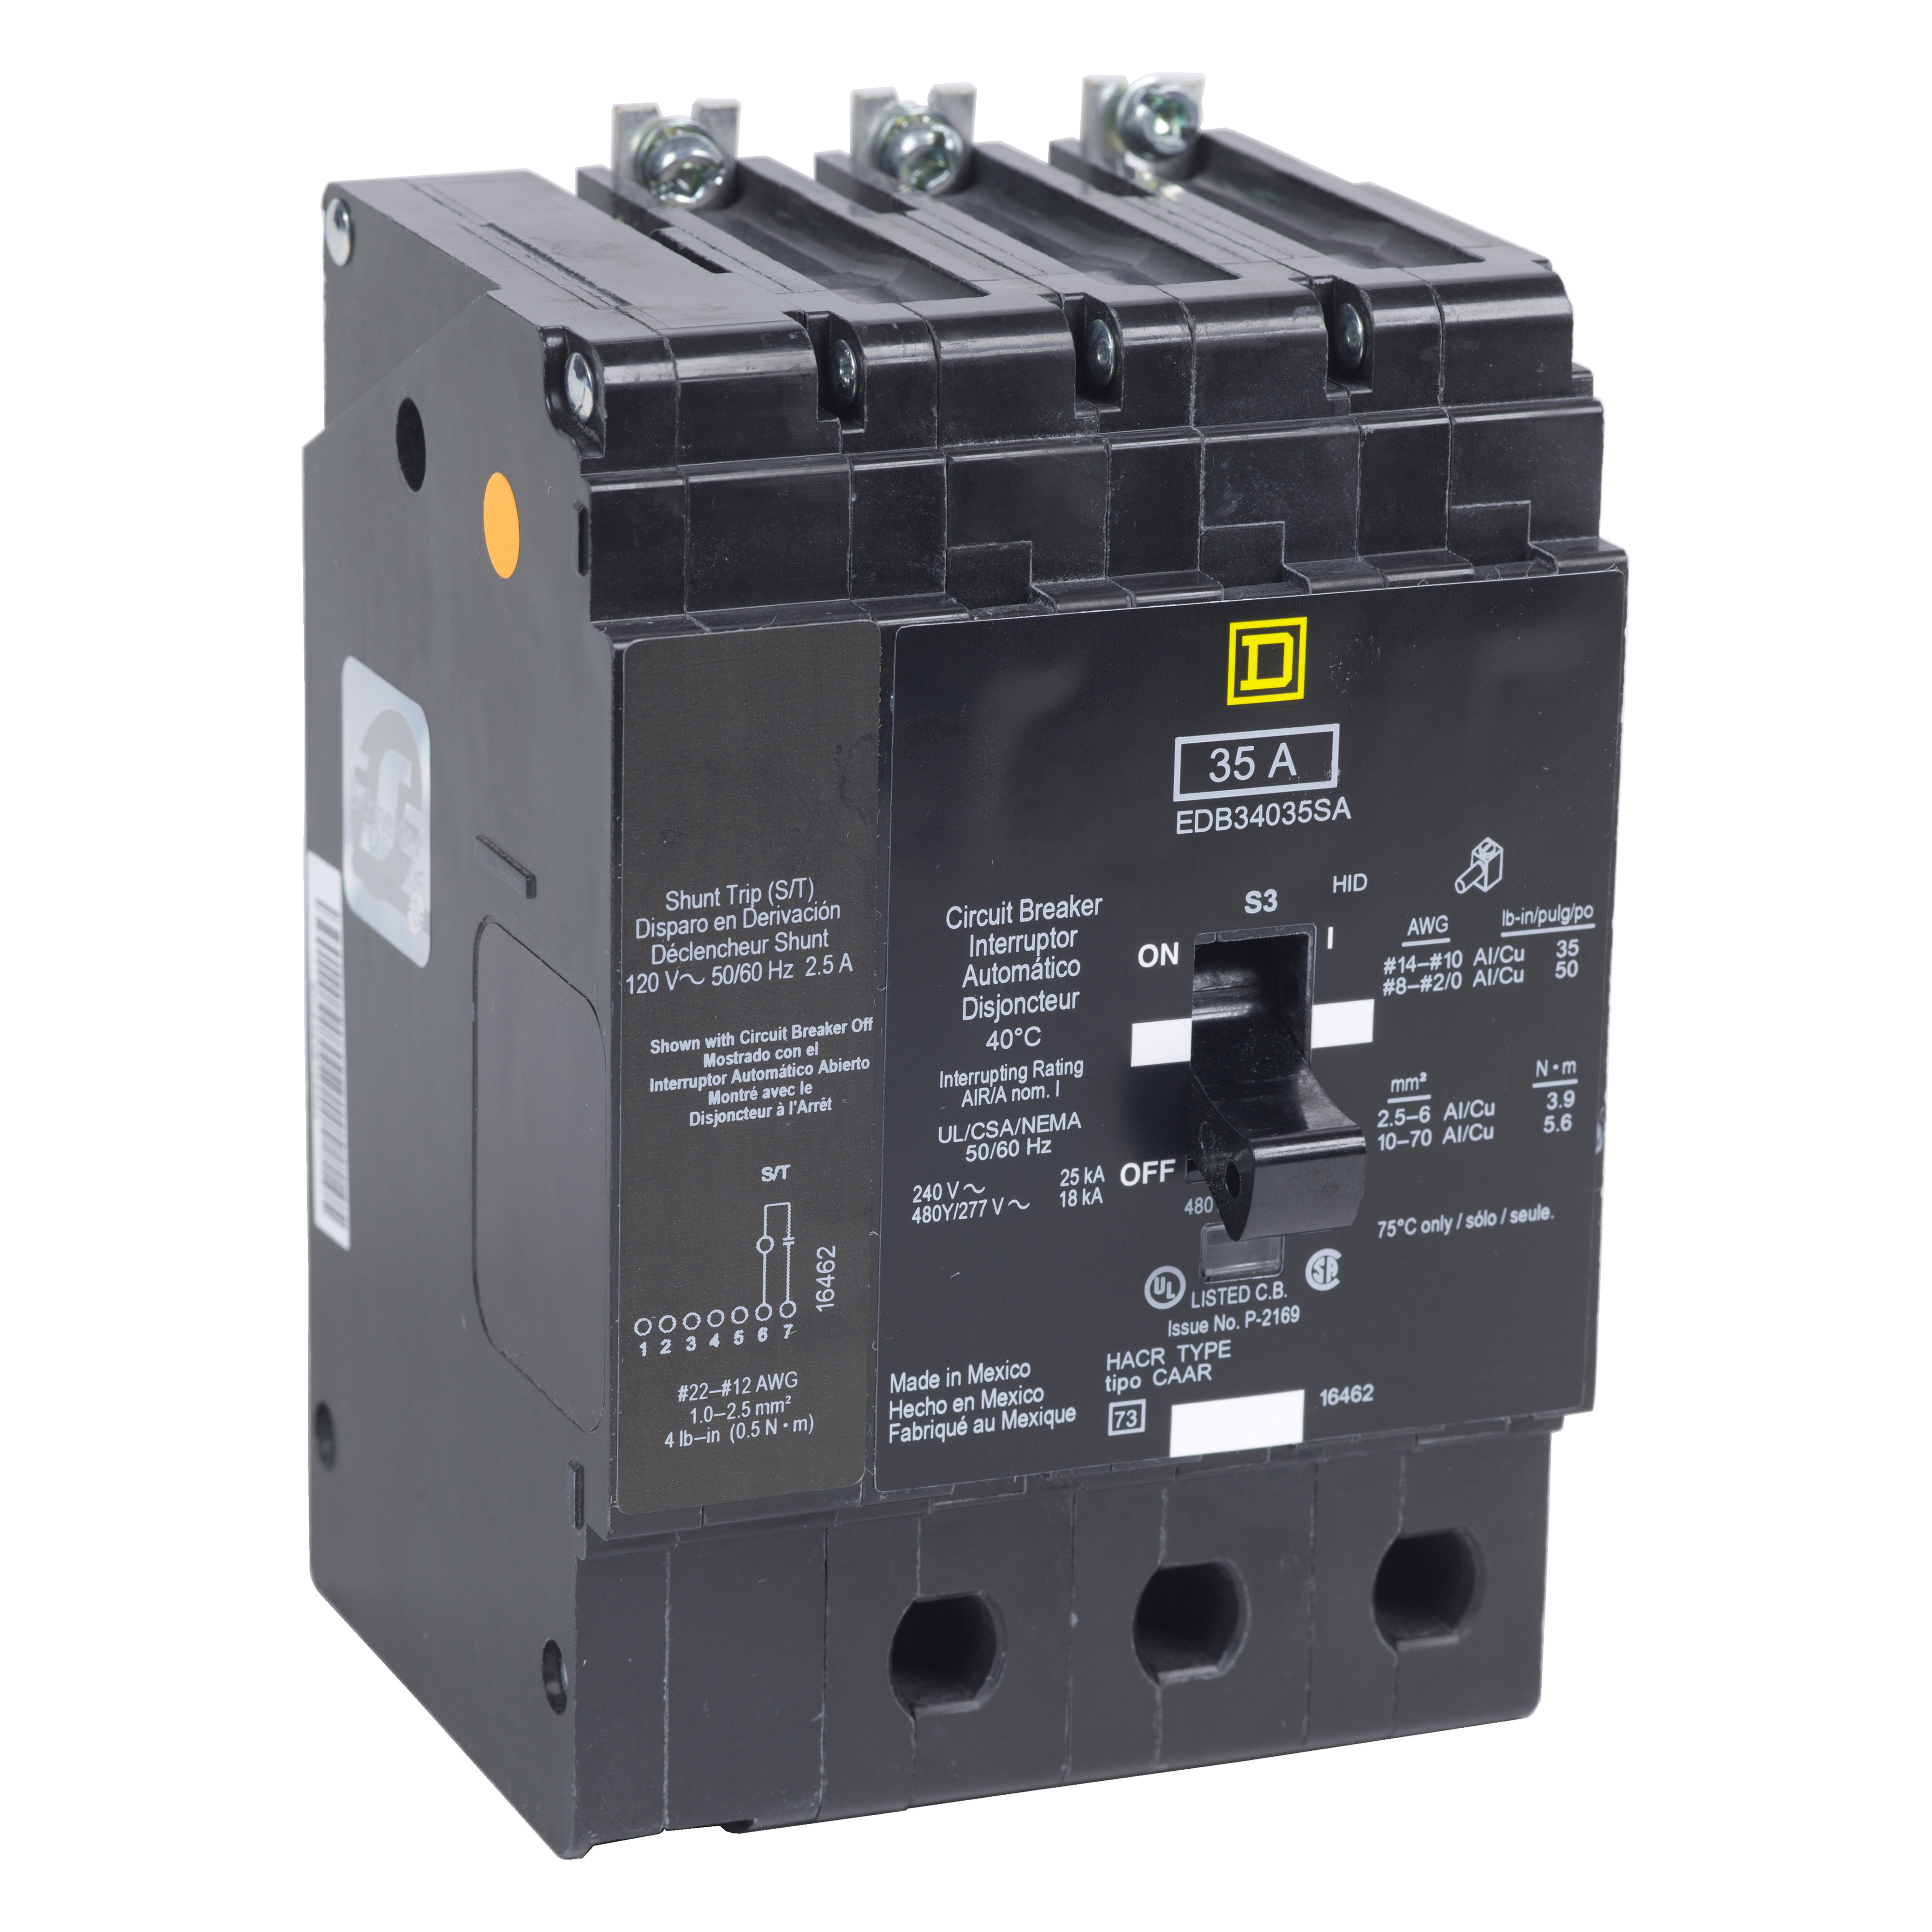 Mini circuit breaker, E-Frame, 100A, 3 pole, 480Y/277 VAC, 25 kA max, bolt on, aux switch, alarm switch, shunt trip